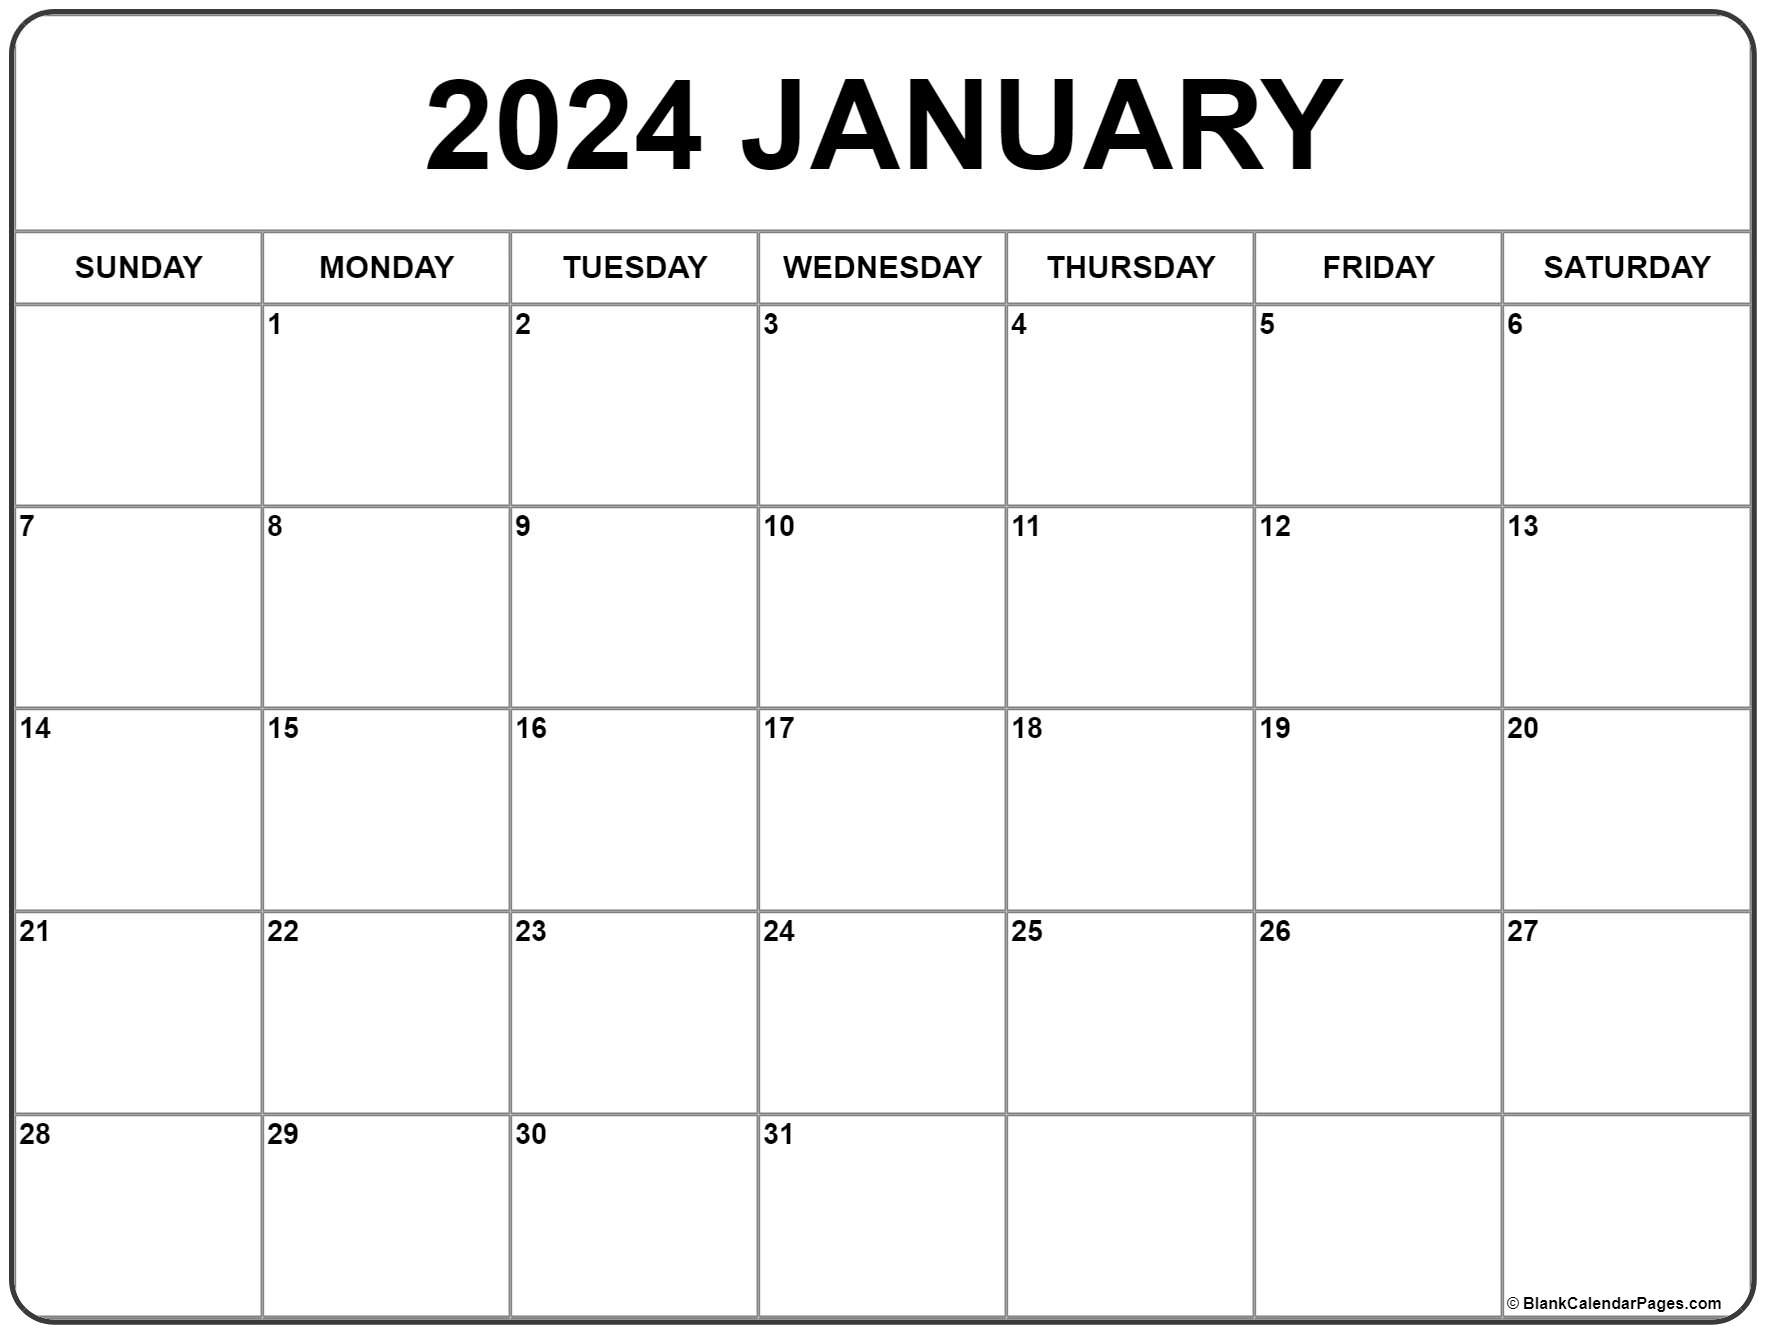 January 2024 Calendar | Free Printable Calendar for January Month Calendar 2024 Printable